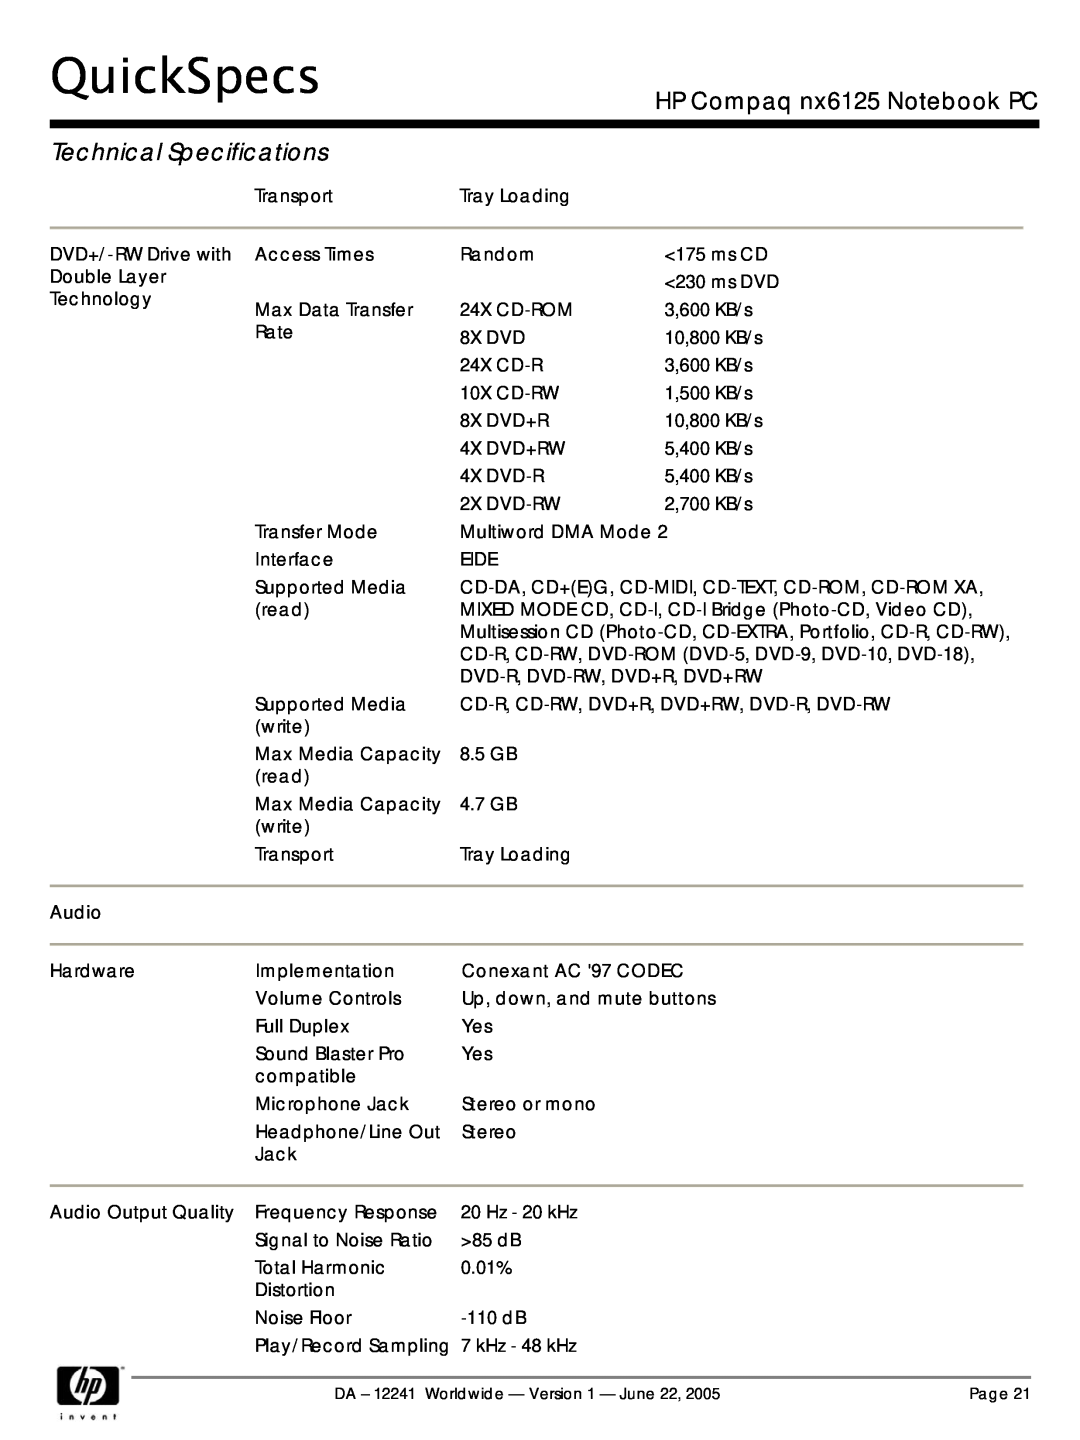 AMD DA - 12241 manual QuickSpecs, HP Compaq nx6125 Notebook PC, Technical Specifications 